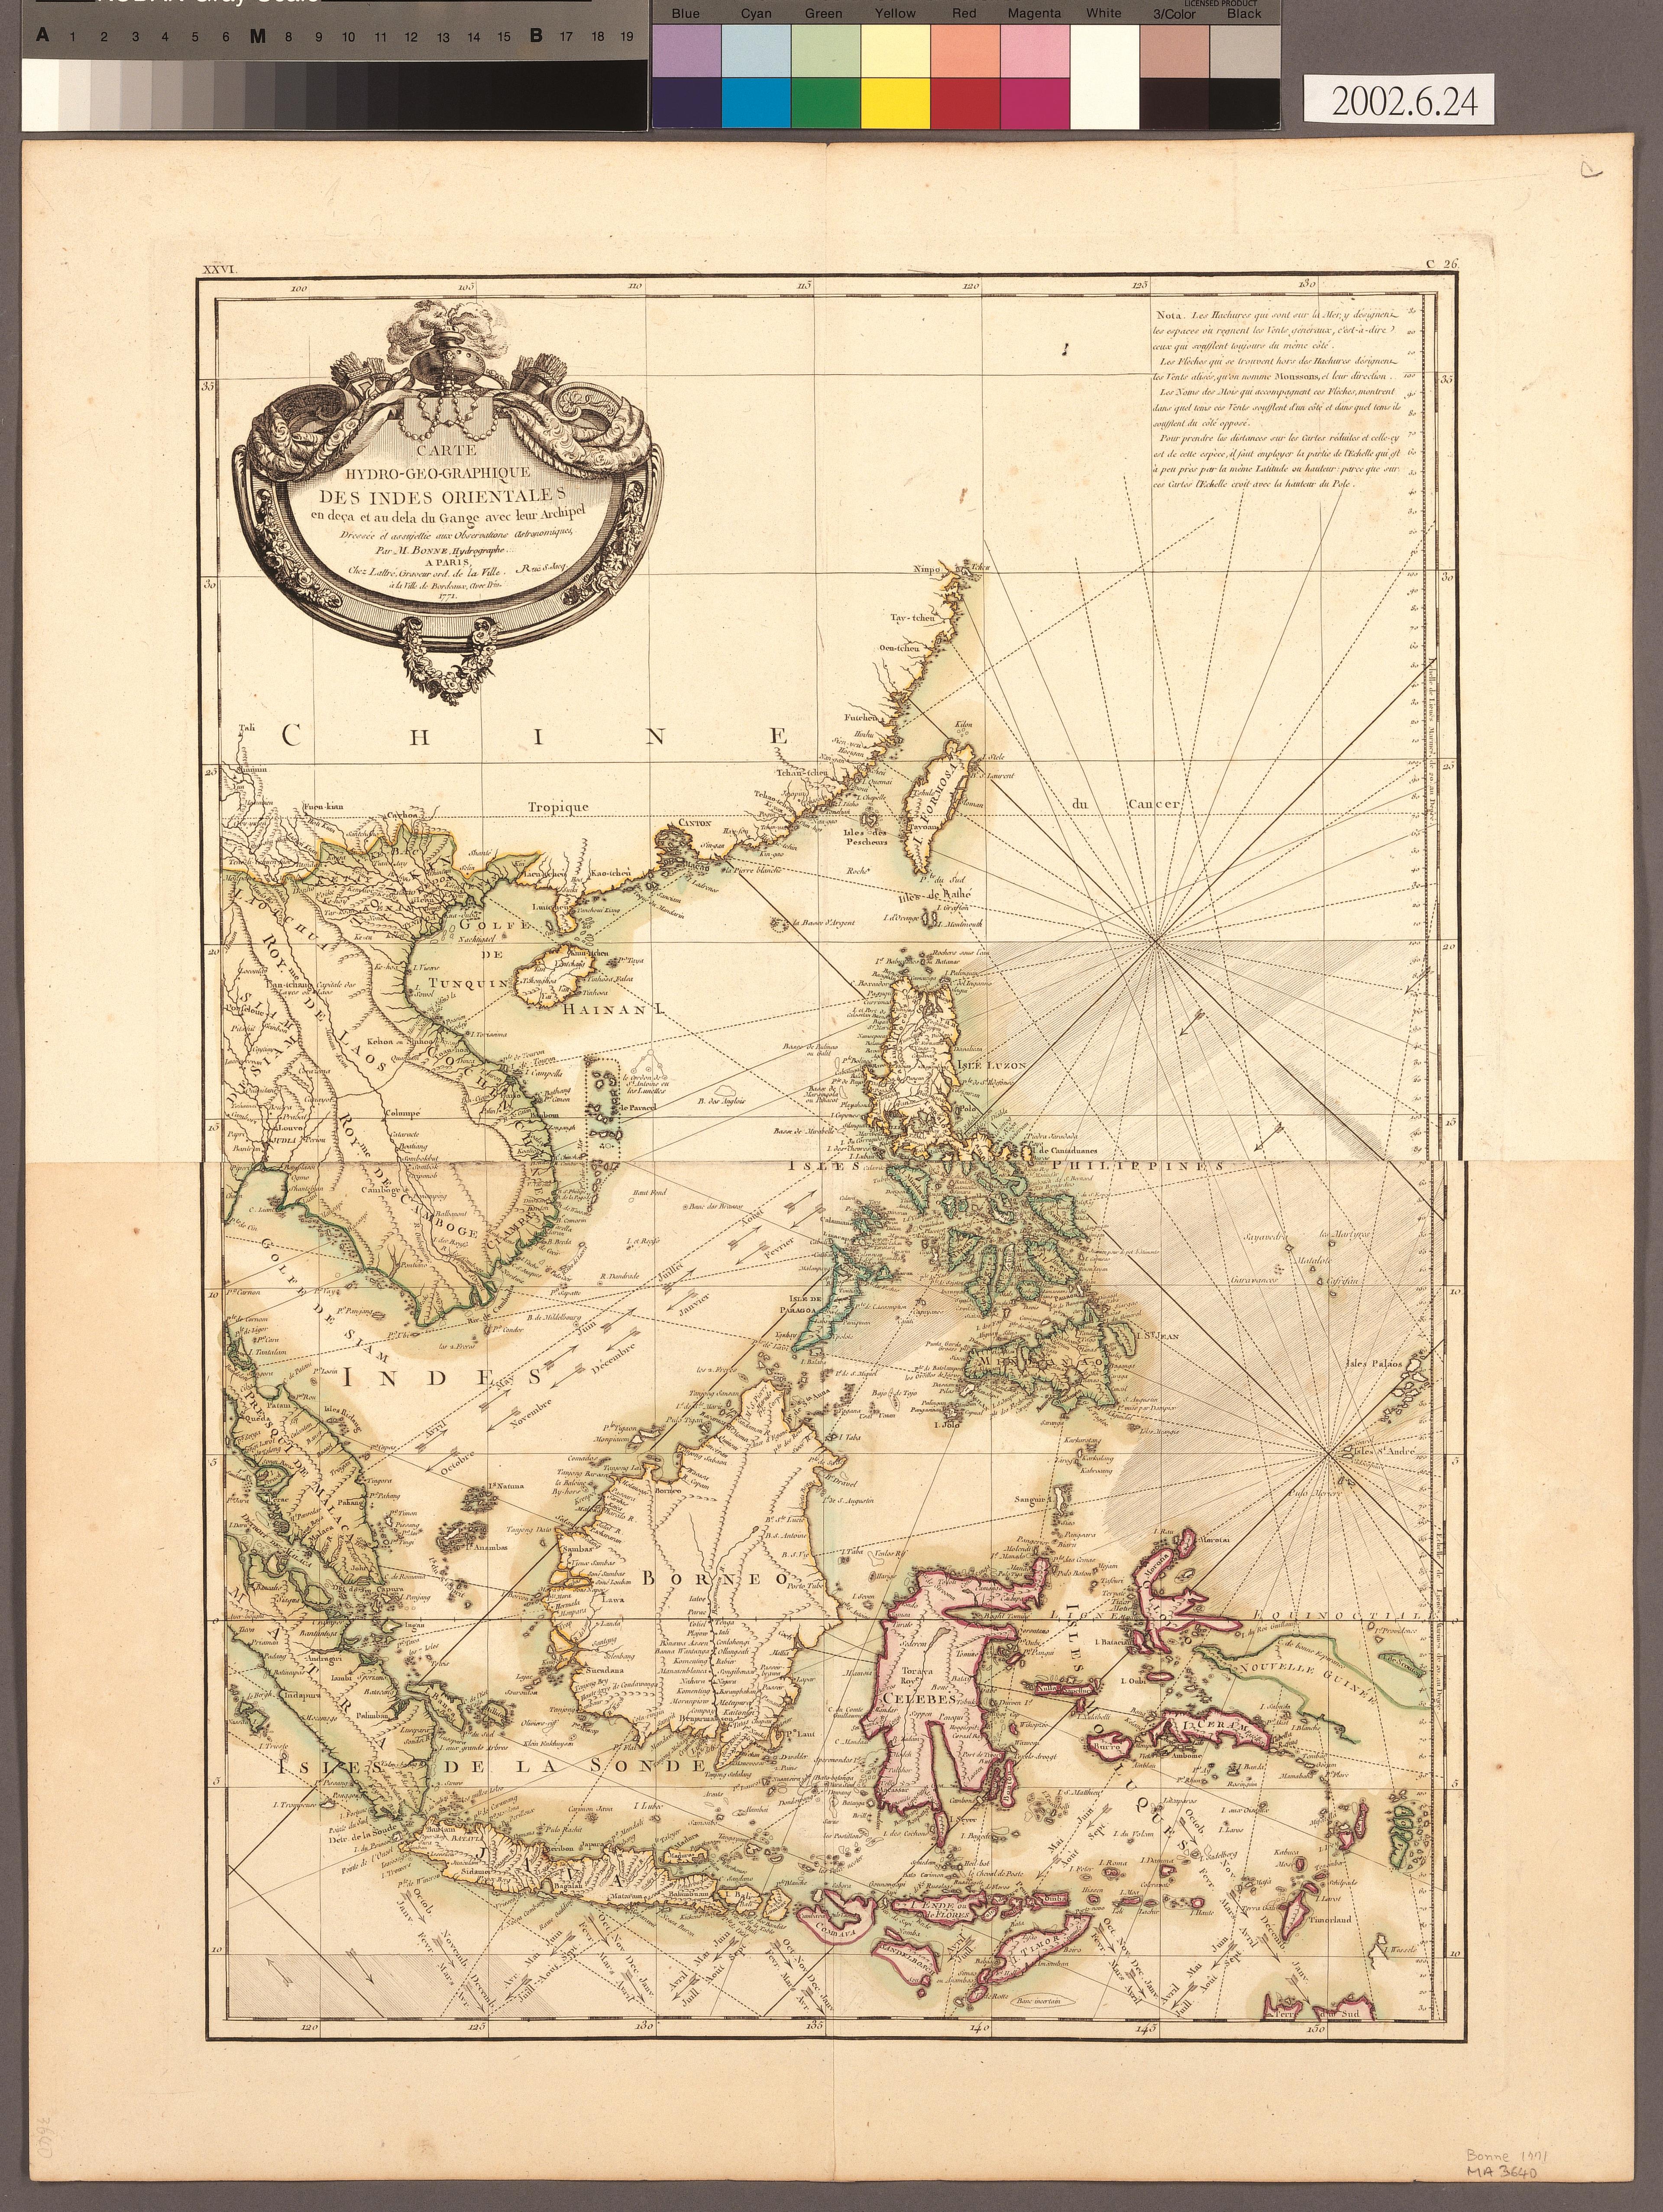 Rigobert Bonne〈東印度航海圖〉 (共2張)